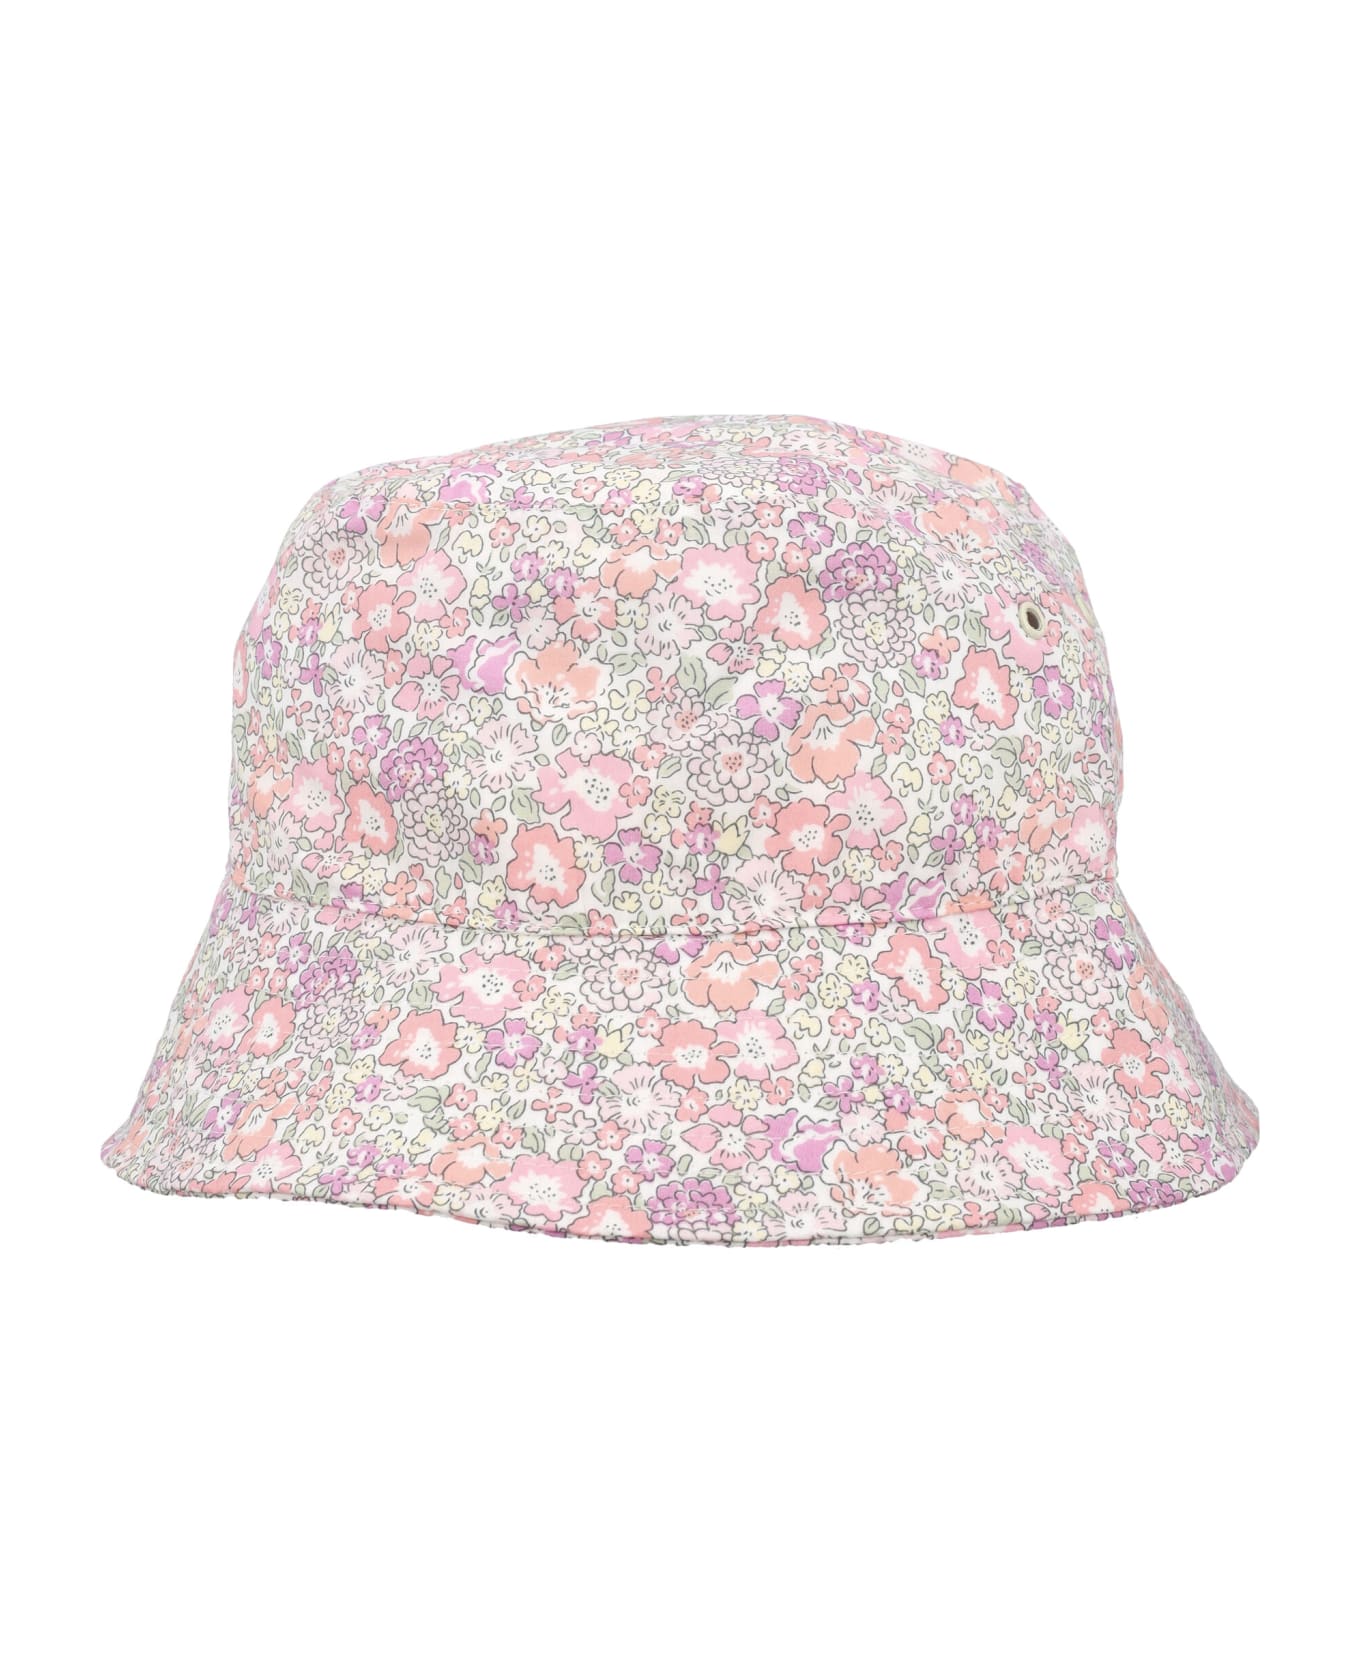 Bonpoint Theana Bucket Hat - FL ROSE FARD